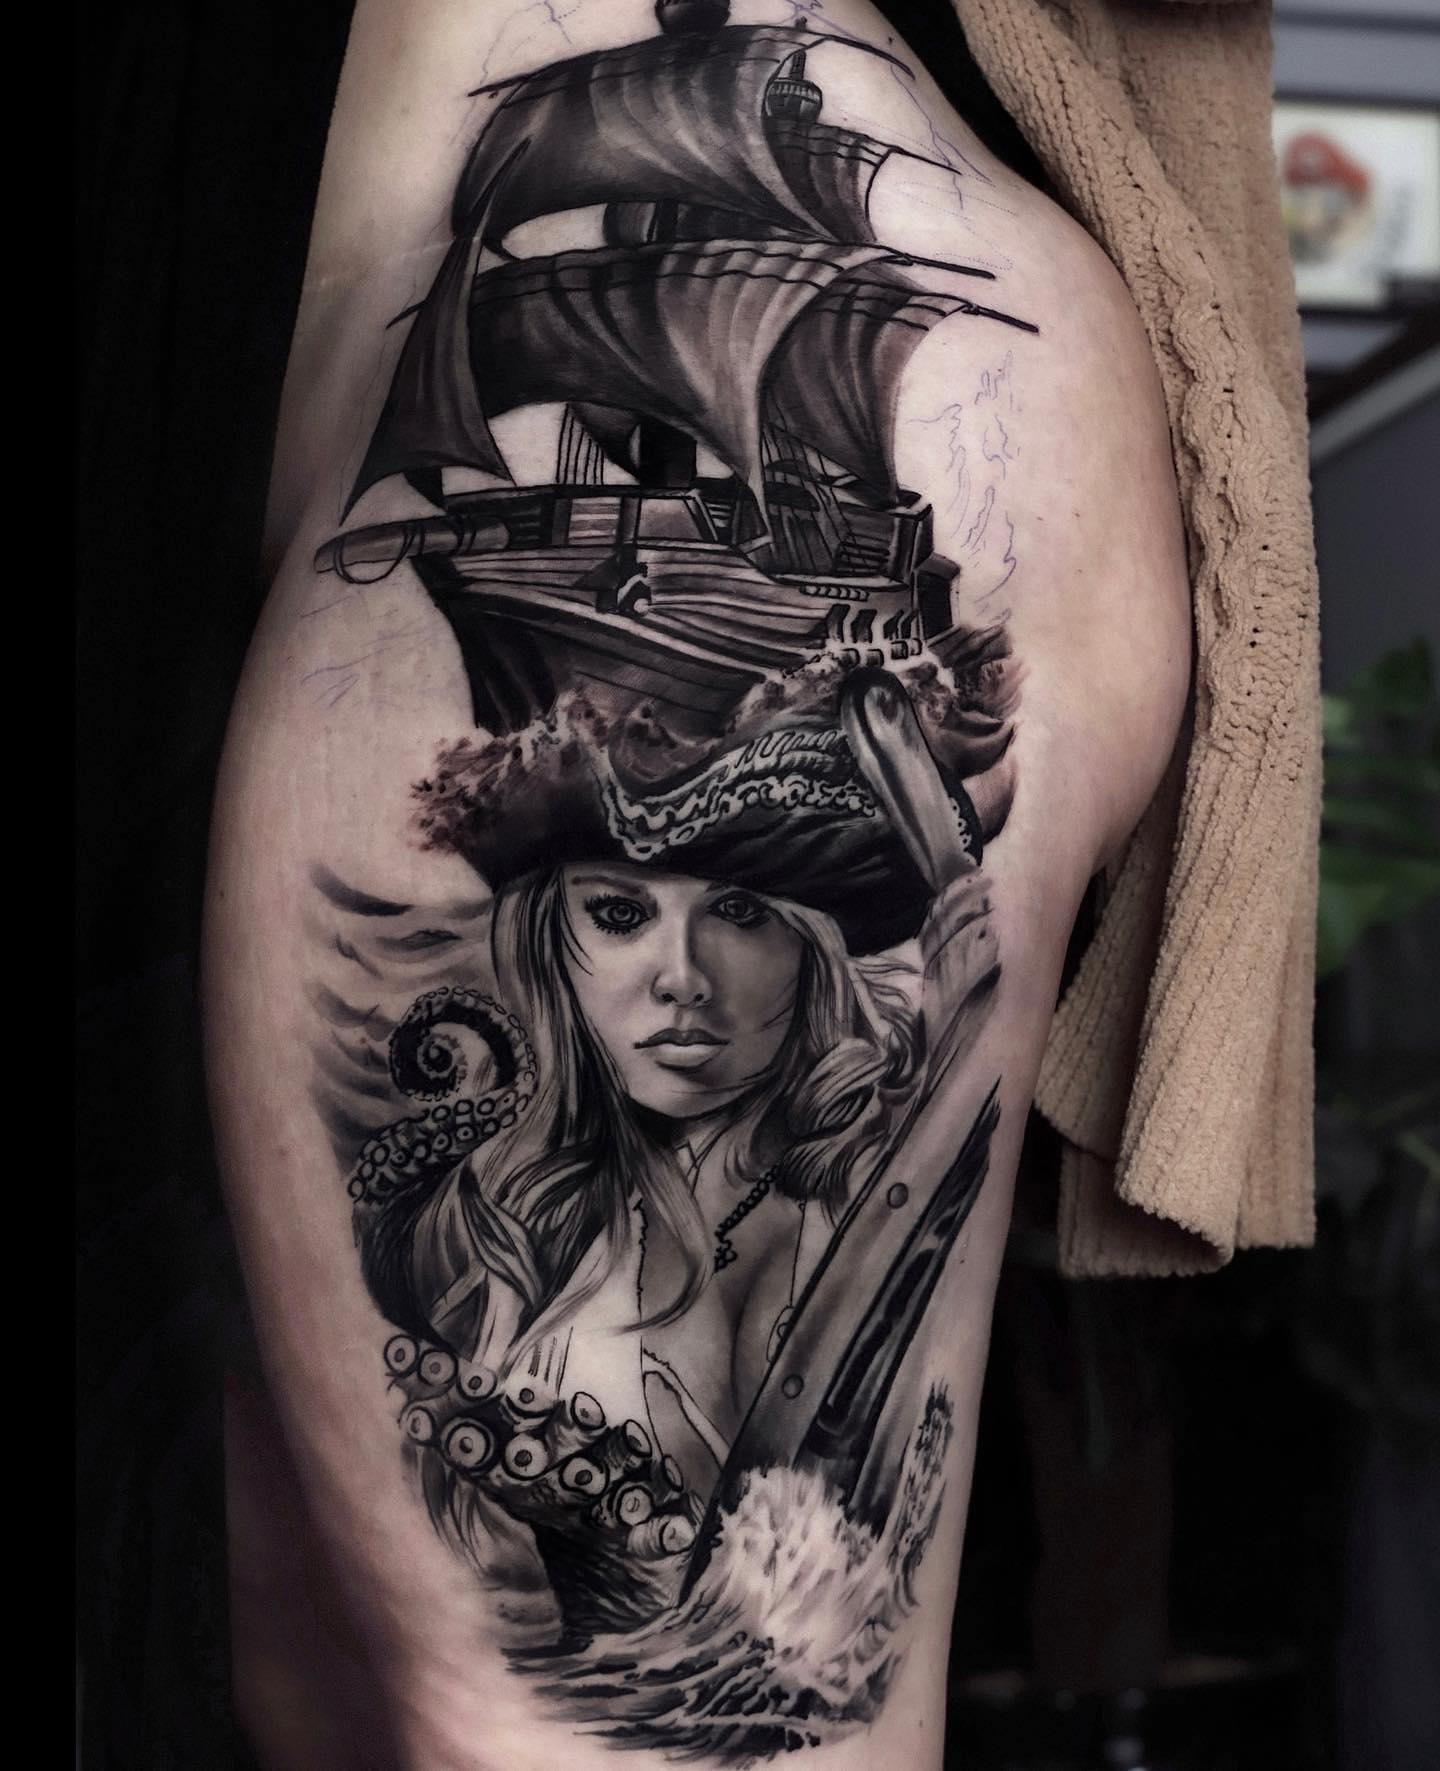 boat tattoo design